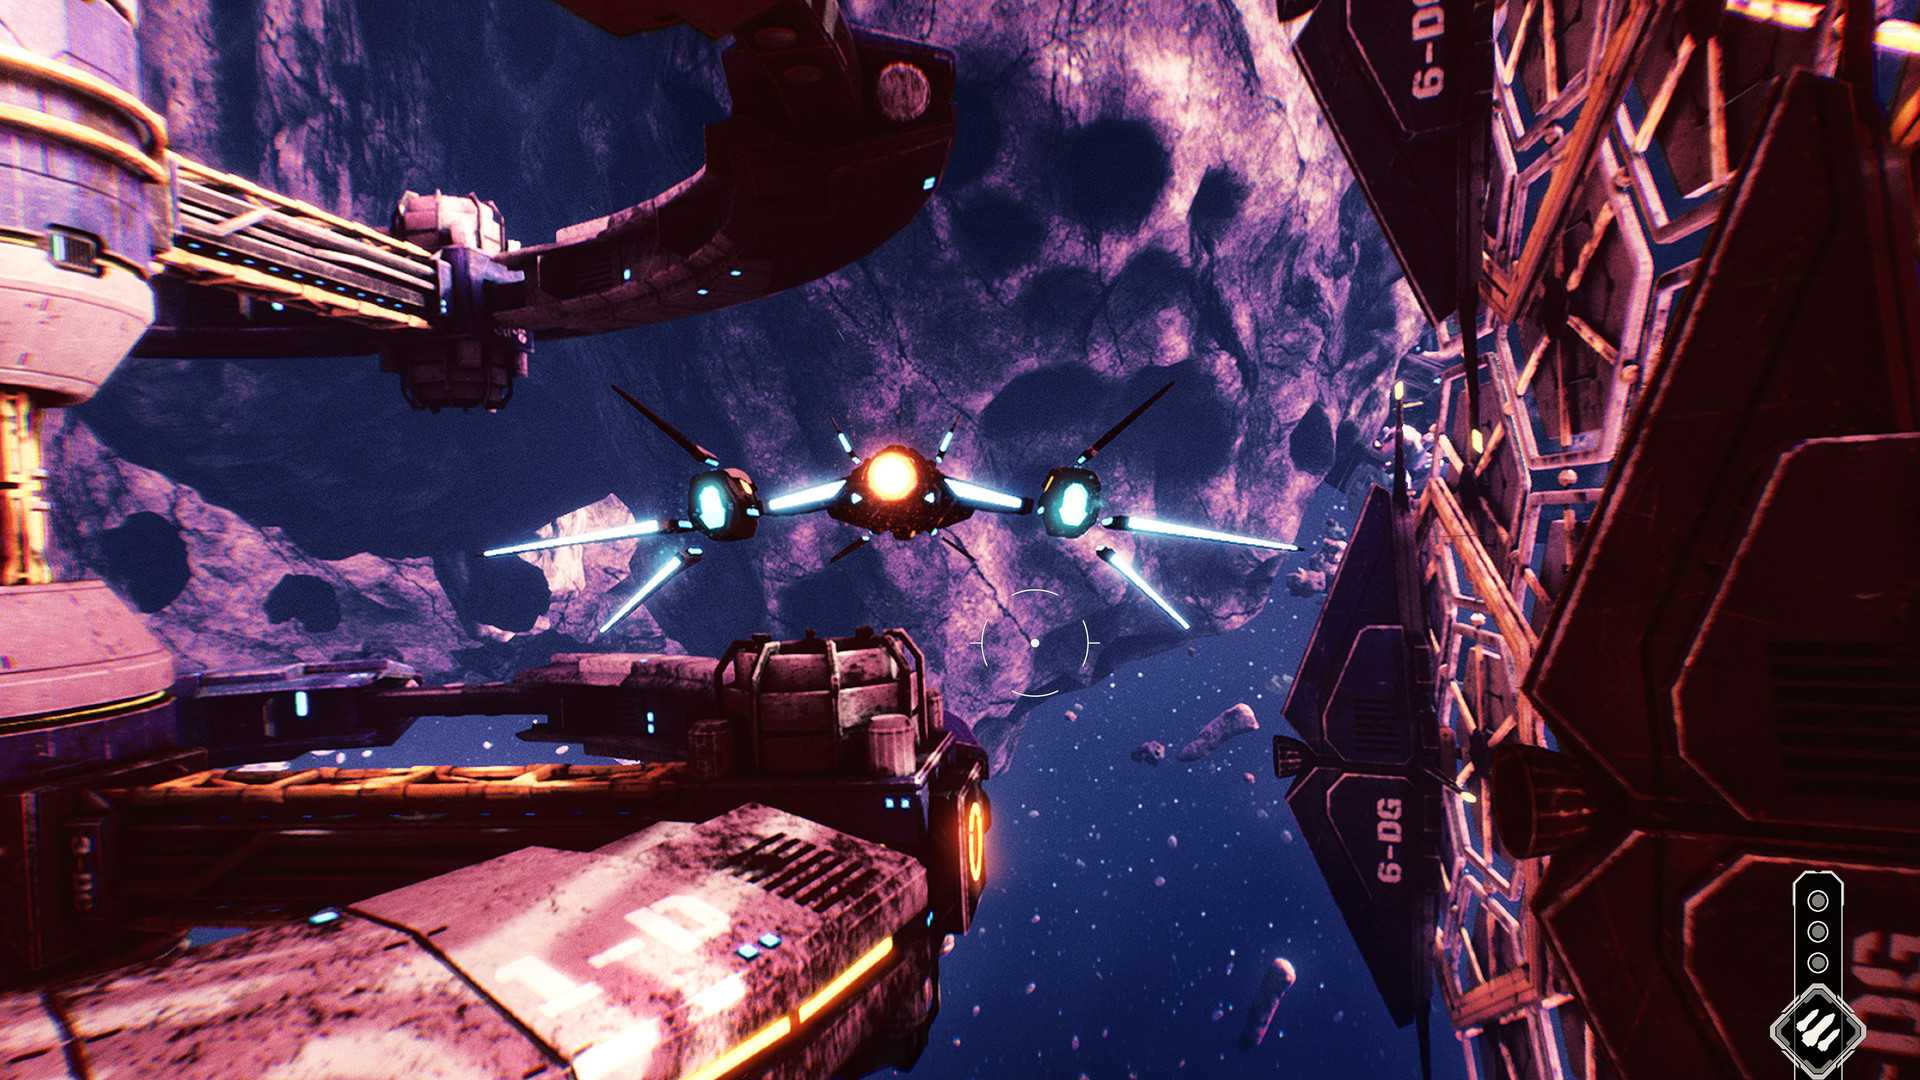 Redout: space assault review – gamecritics.com